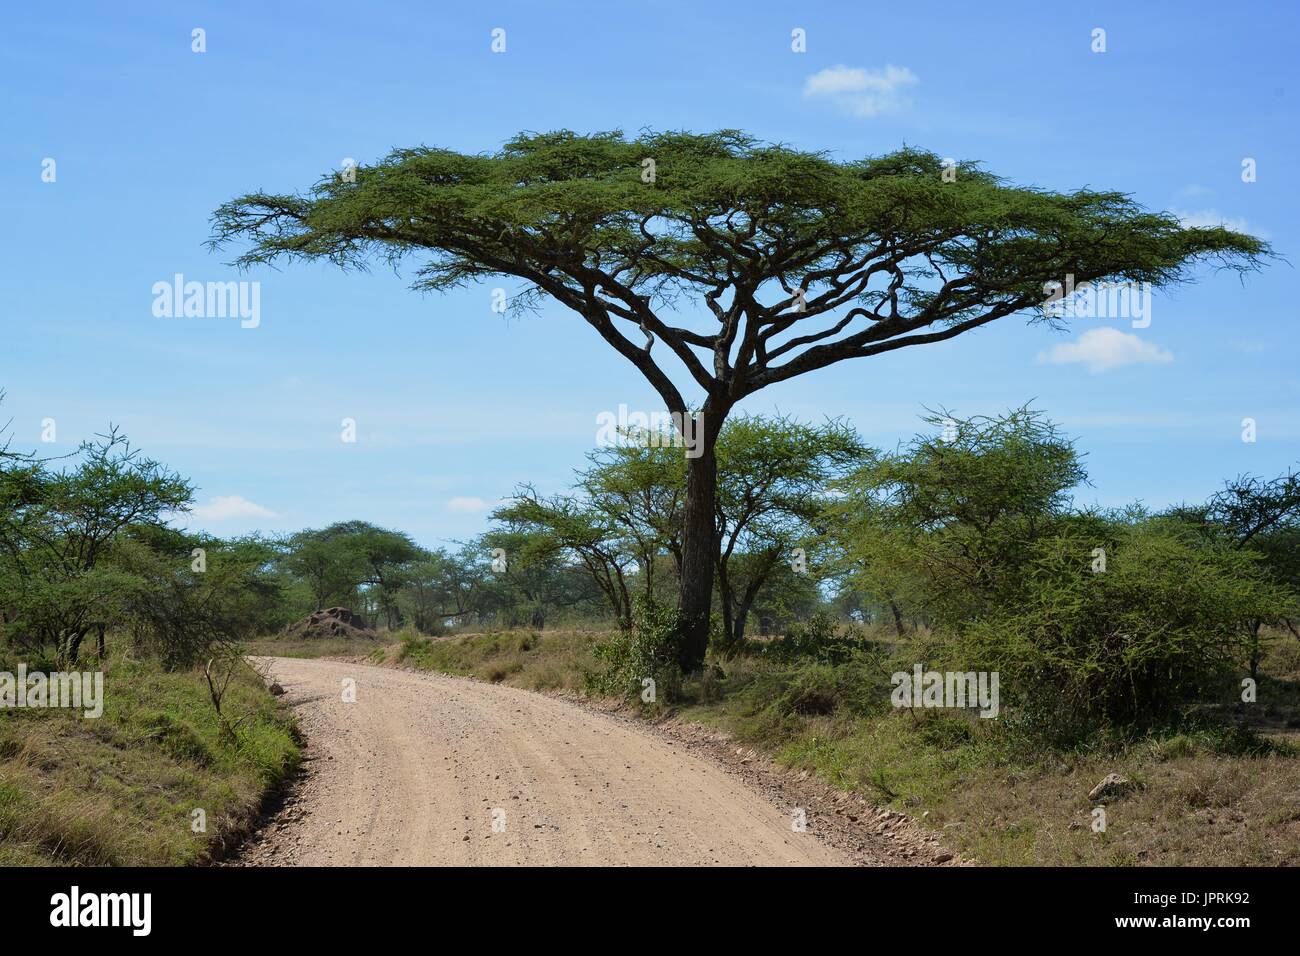 African Safari Landscape in Tanzania Stock Photo